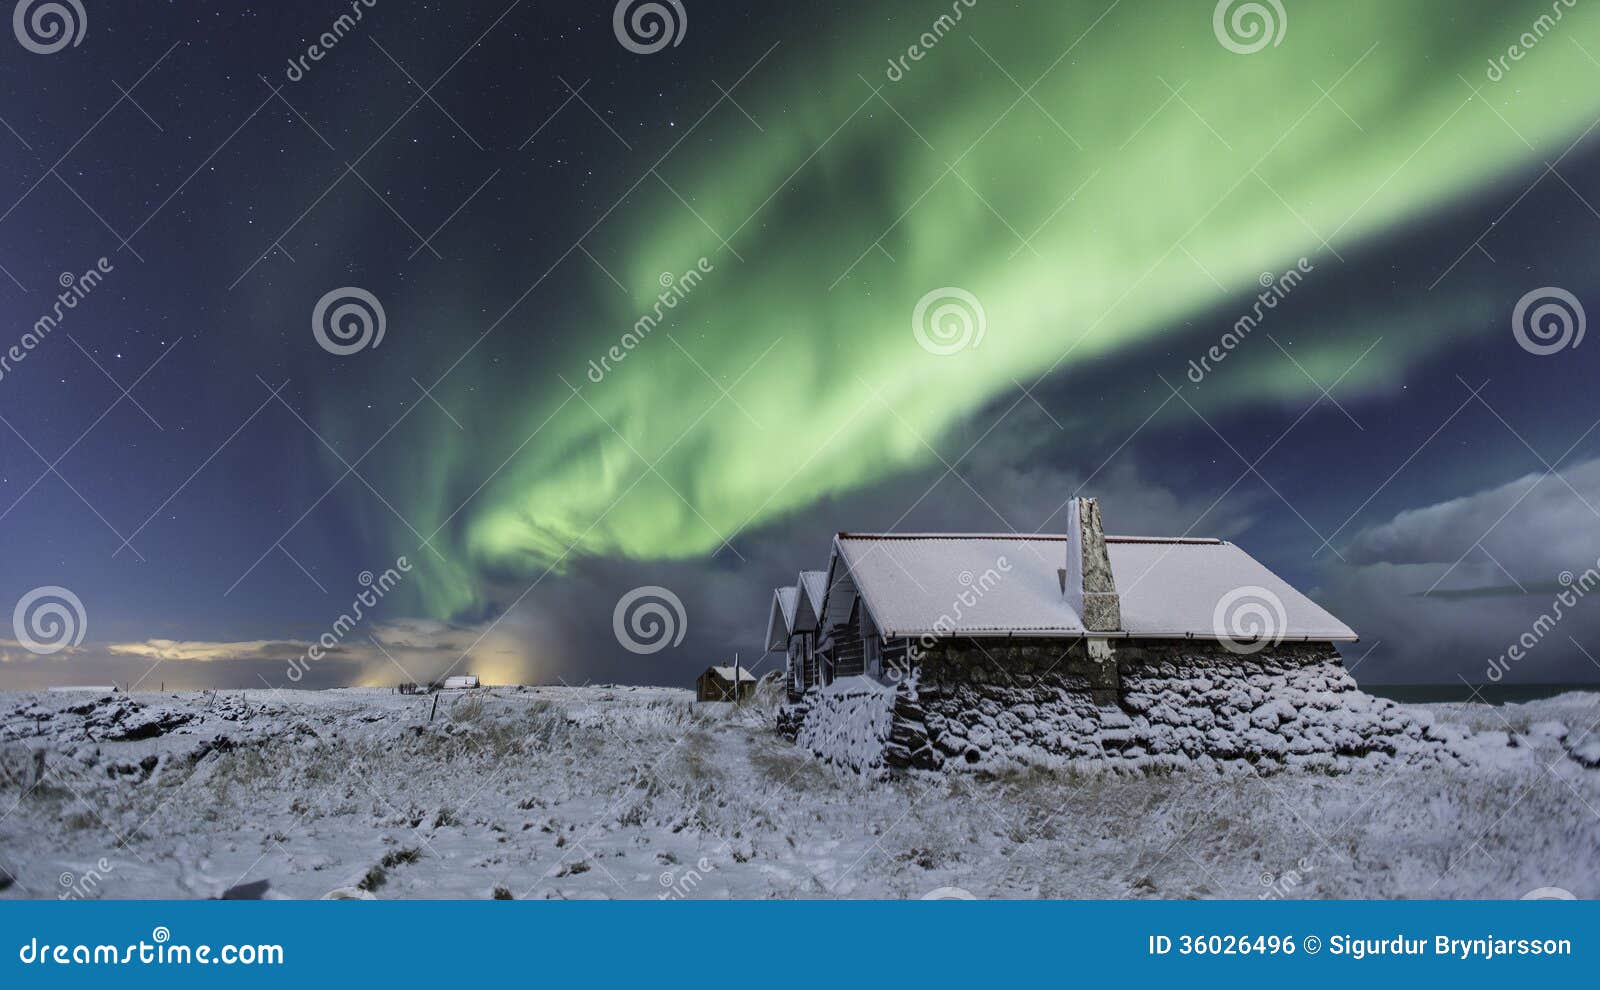 northern lights in winter